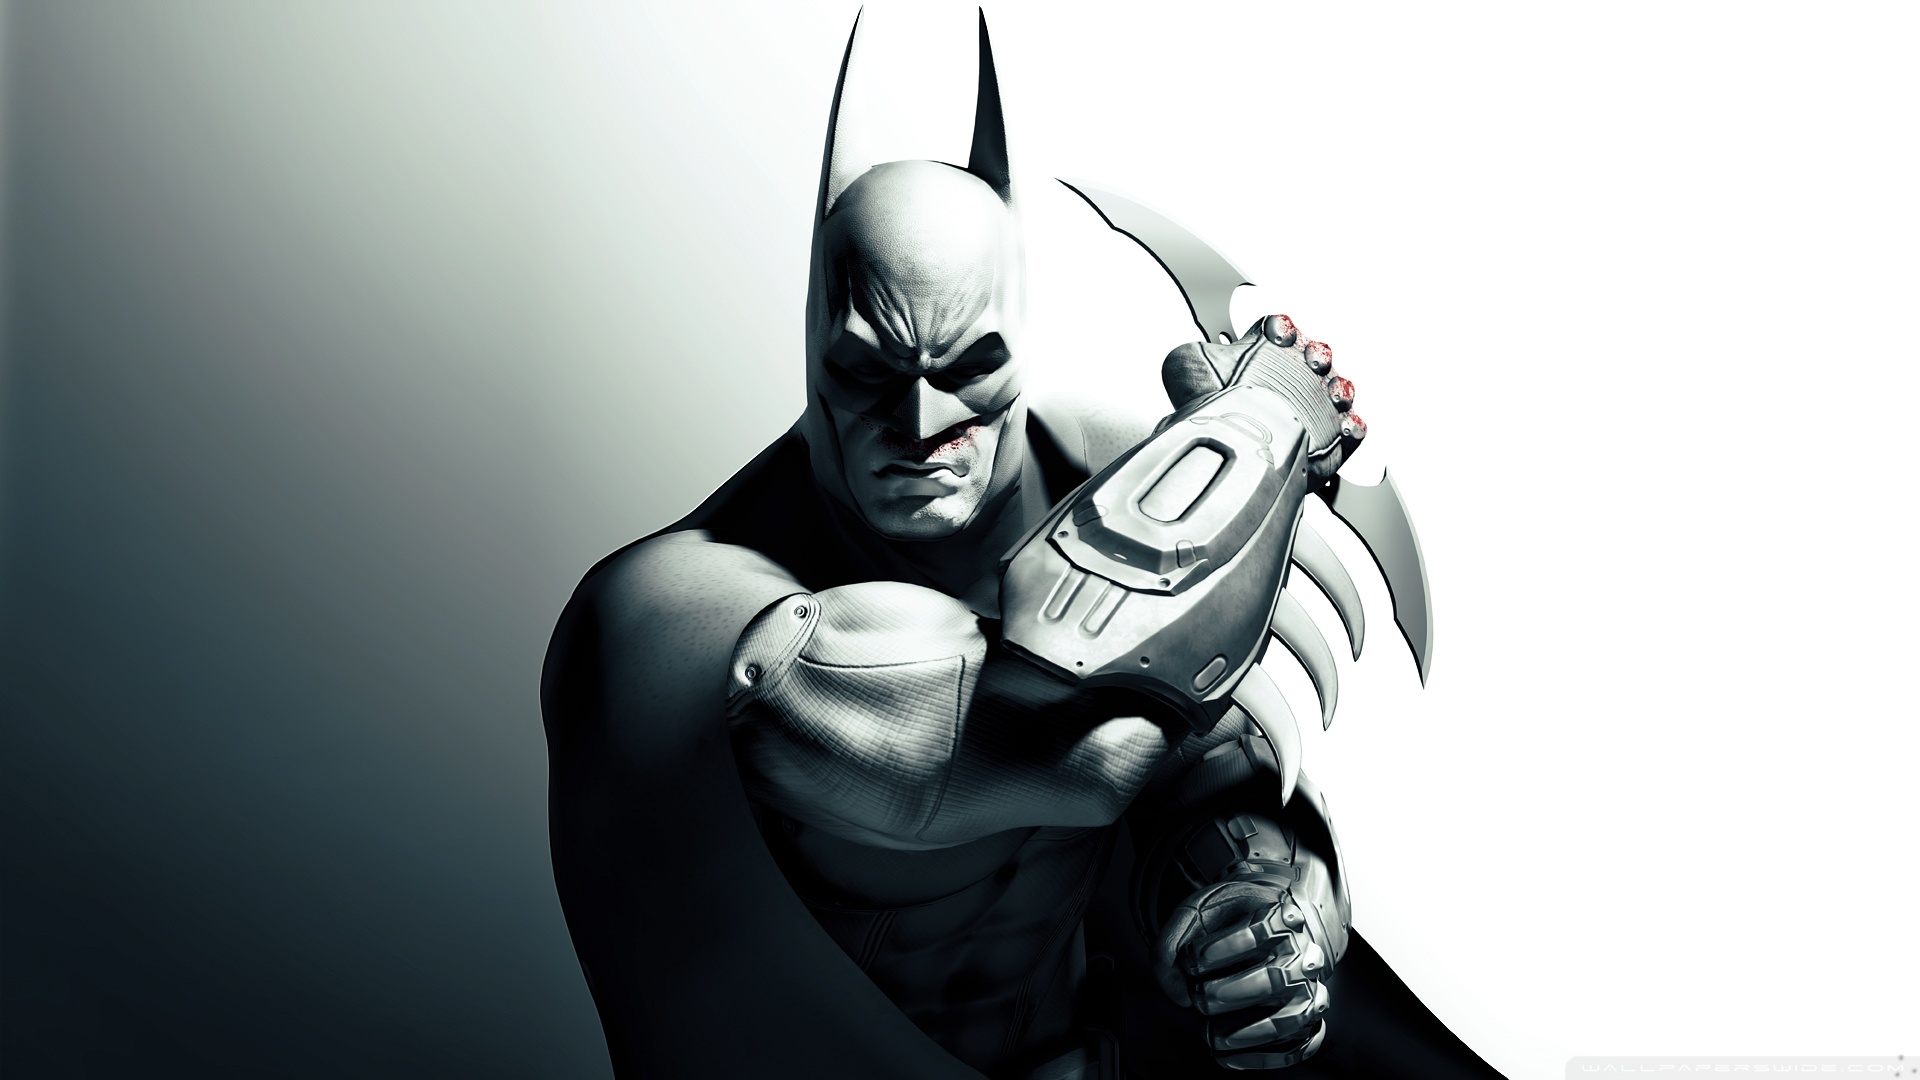 batman hd wallpapers for pc,batman,superhero,fictional character,illustration,justice league